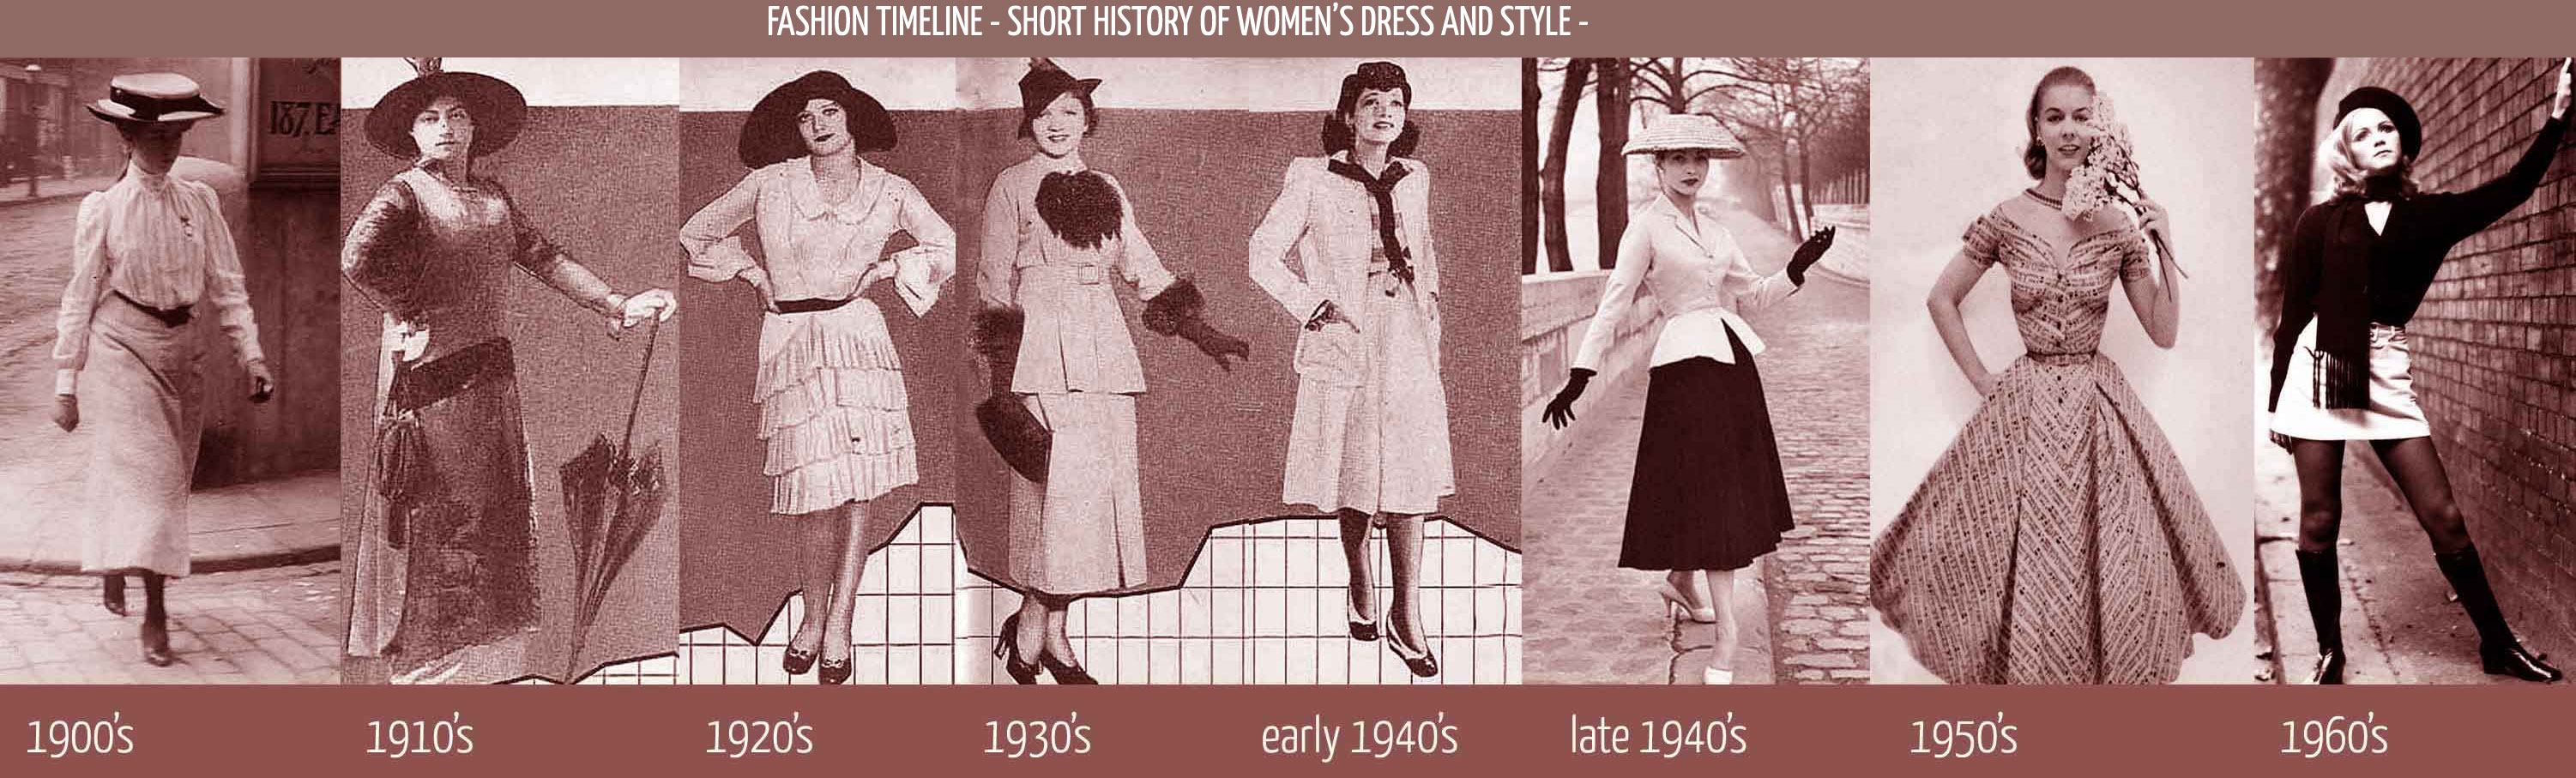 History of Fashion